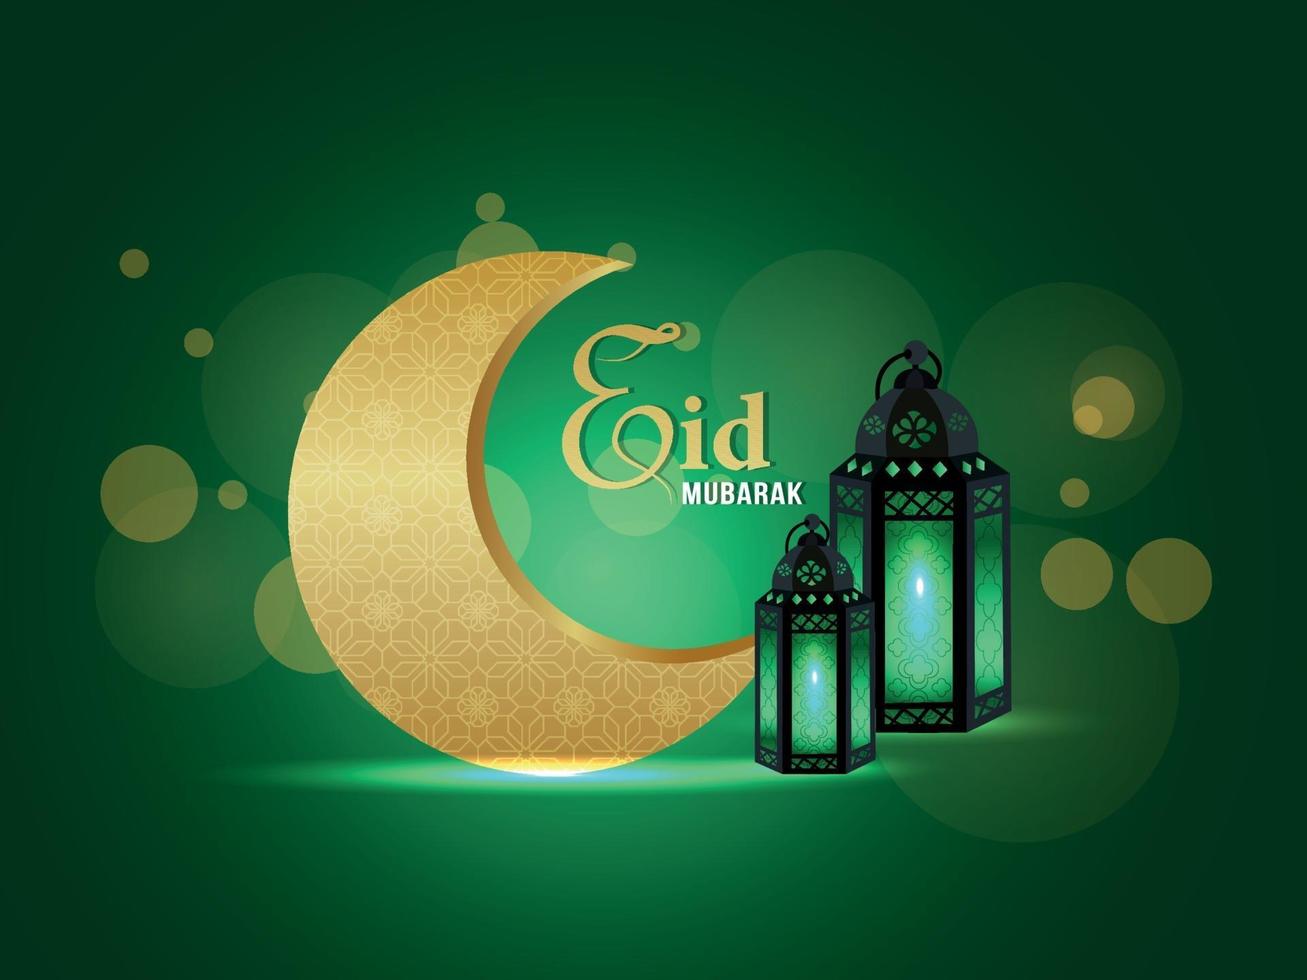 Eid mubarak celebration greeting card with vector lanterns on pattern background